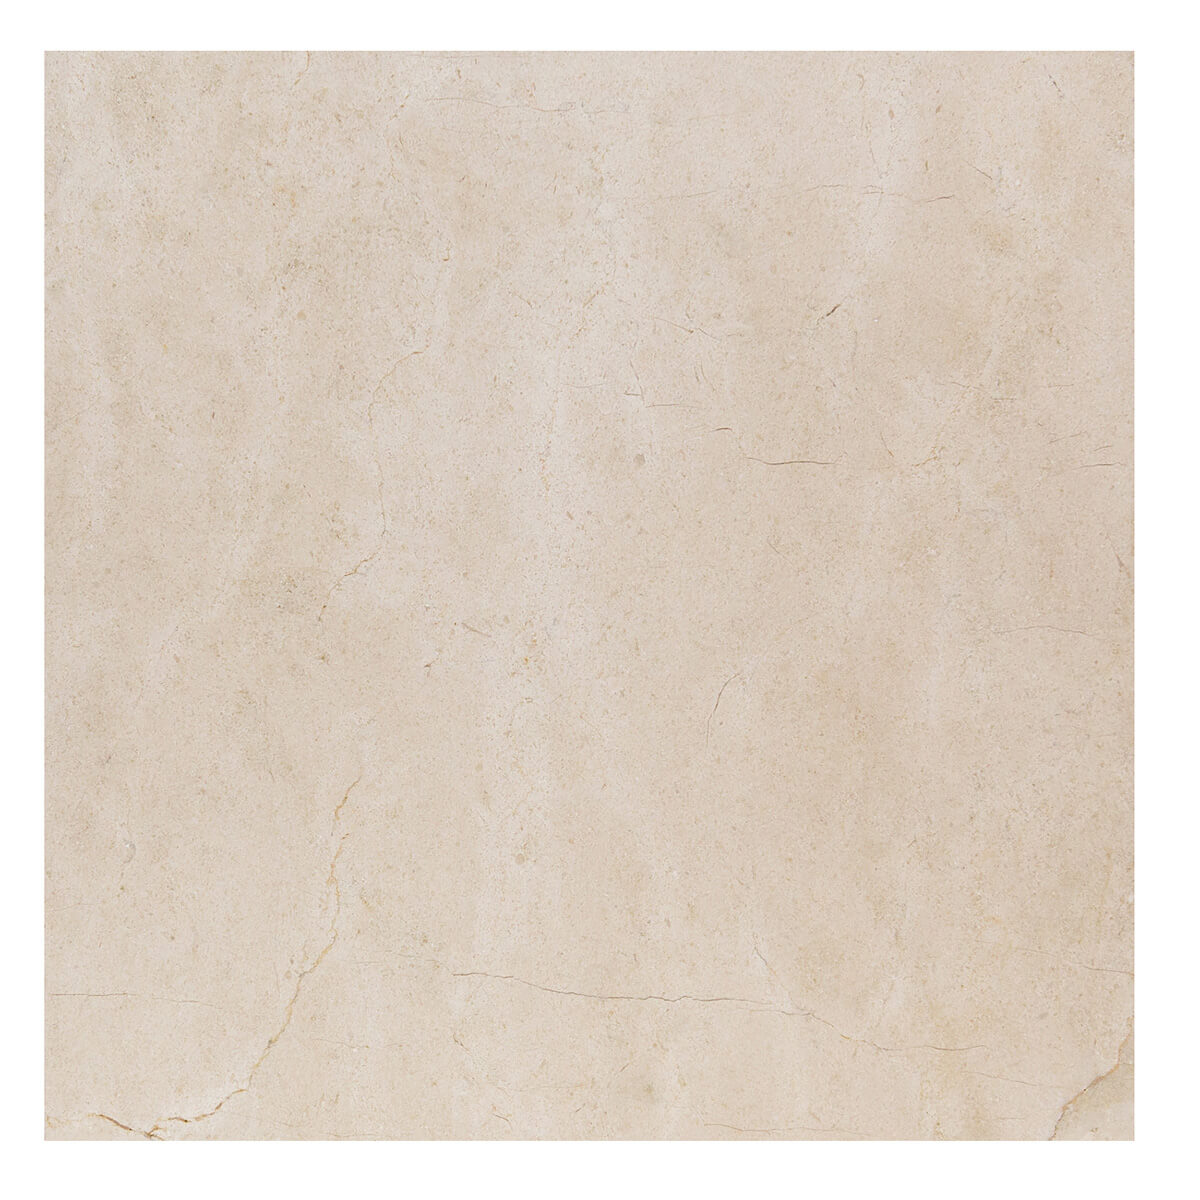 haussmann crema marfil limestone square natural stone field tile 12x12 honed